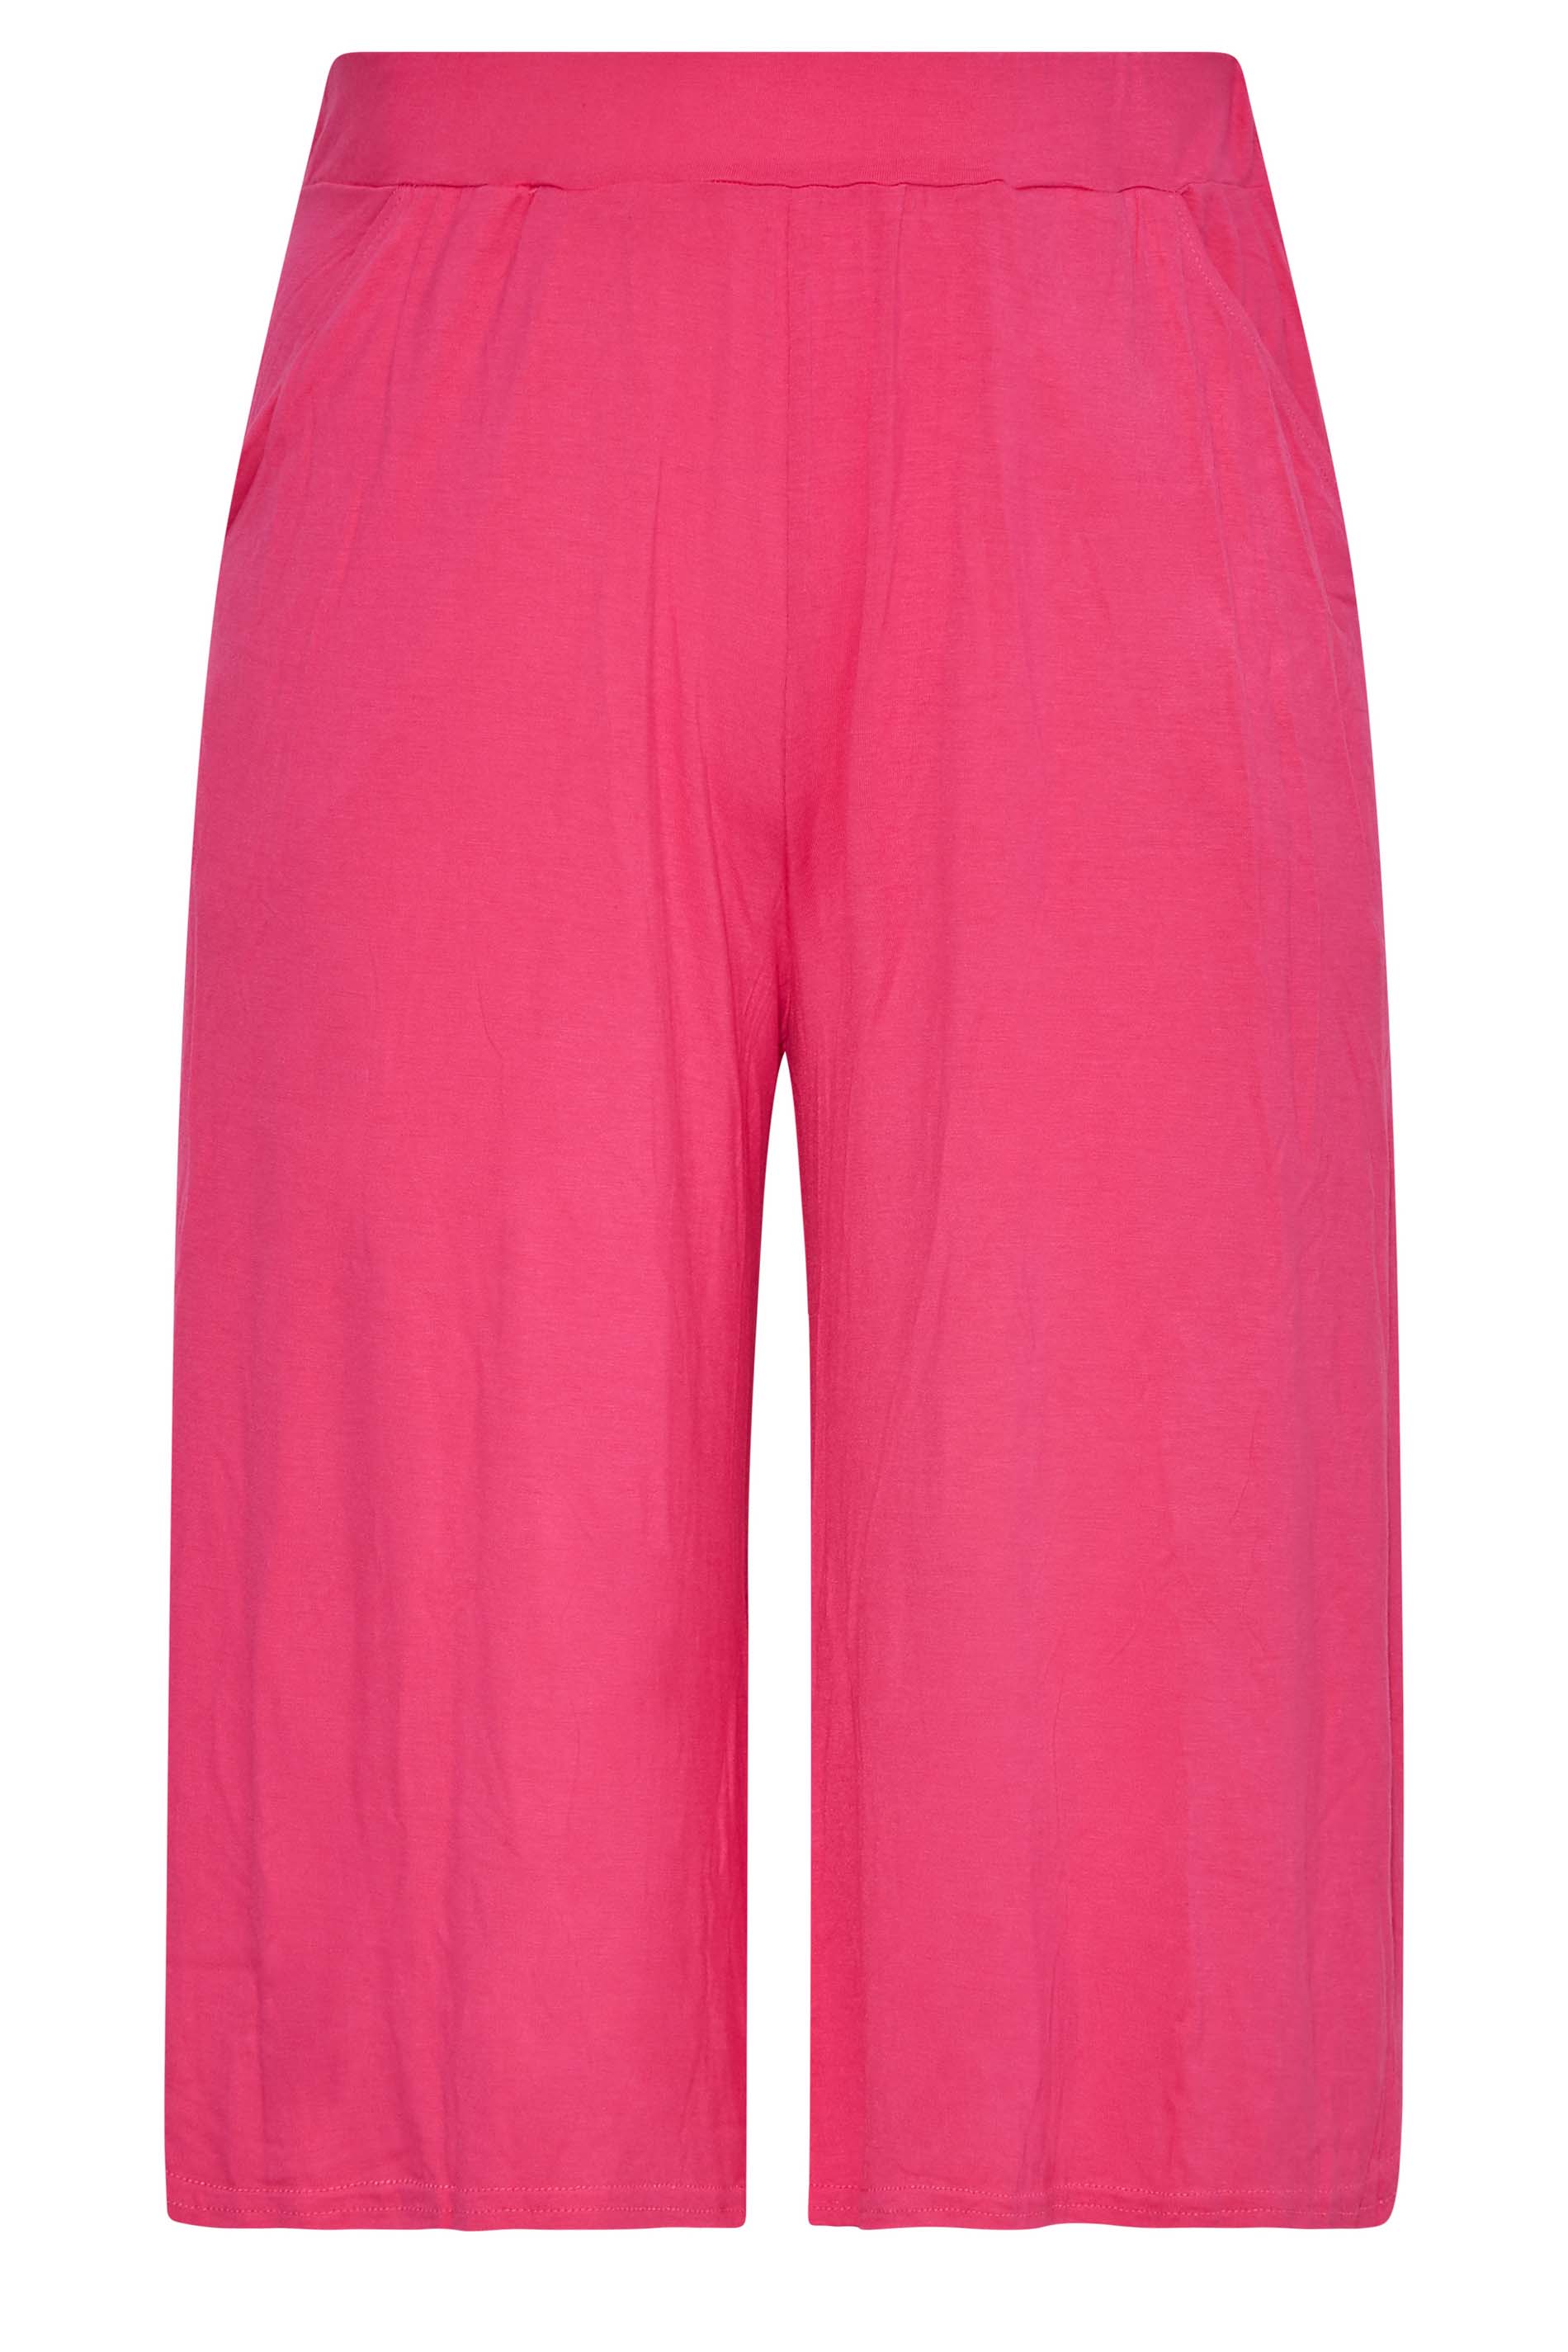 Grande taille  Pantalons Grande taille  Pantacourts | Jupe-Culotte en Jersey Rose Bonbon - UR38941